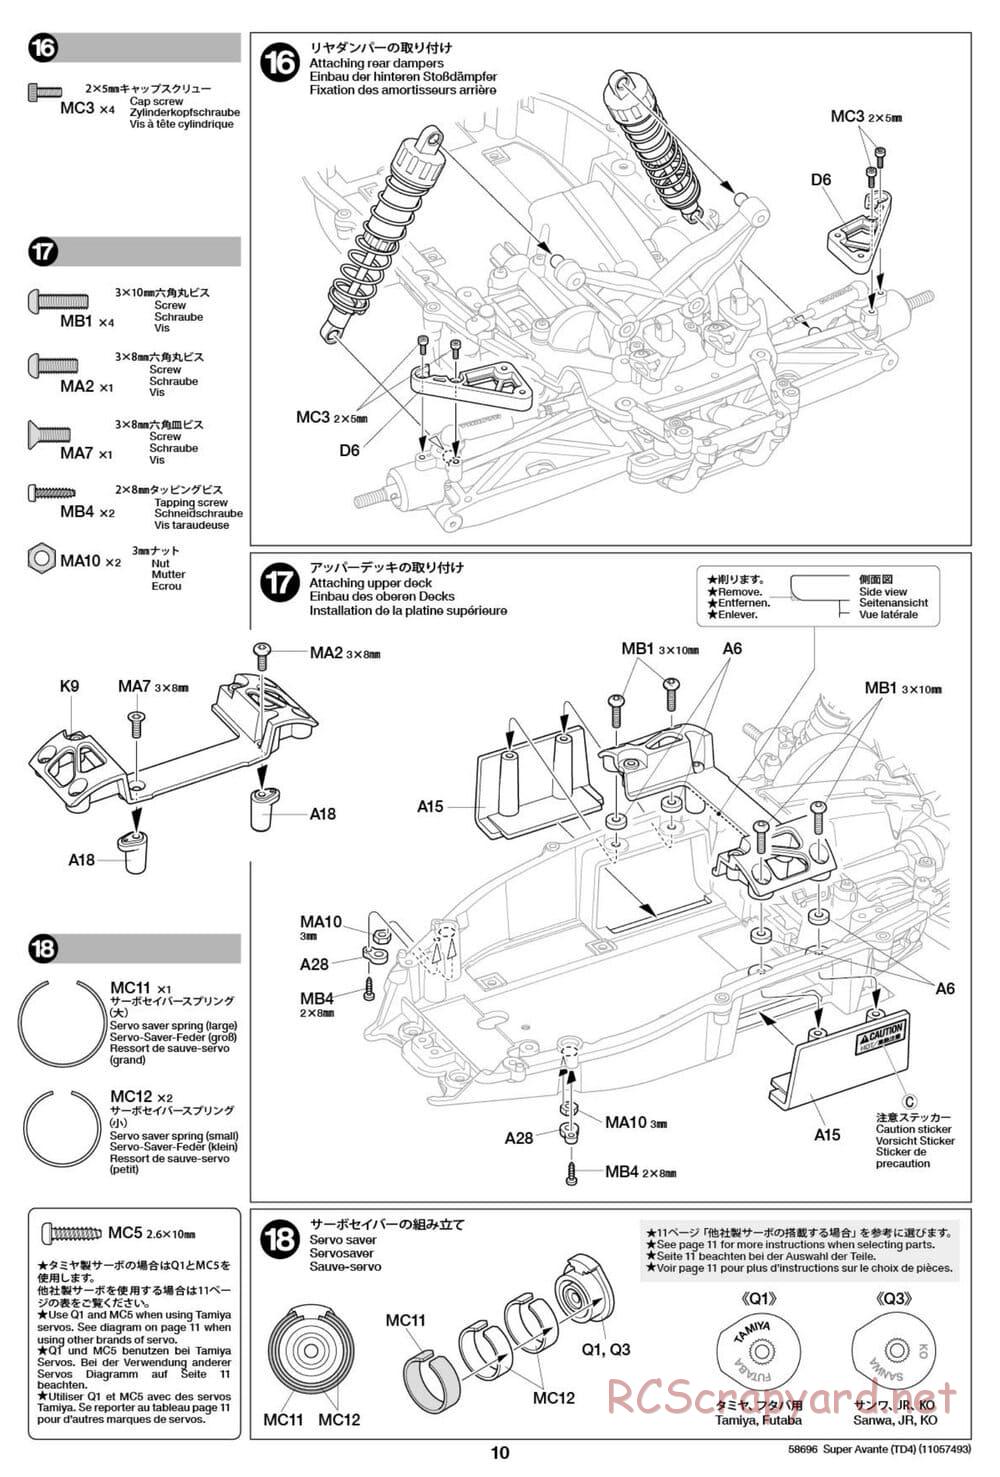 Tamiya - Super Avante - TD4 Chassis - Manual - Page 11